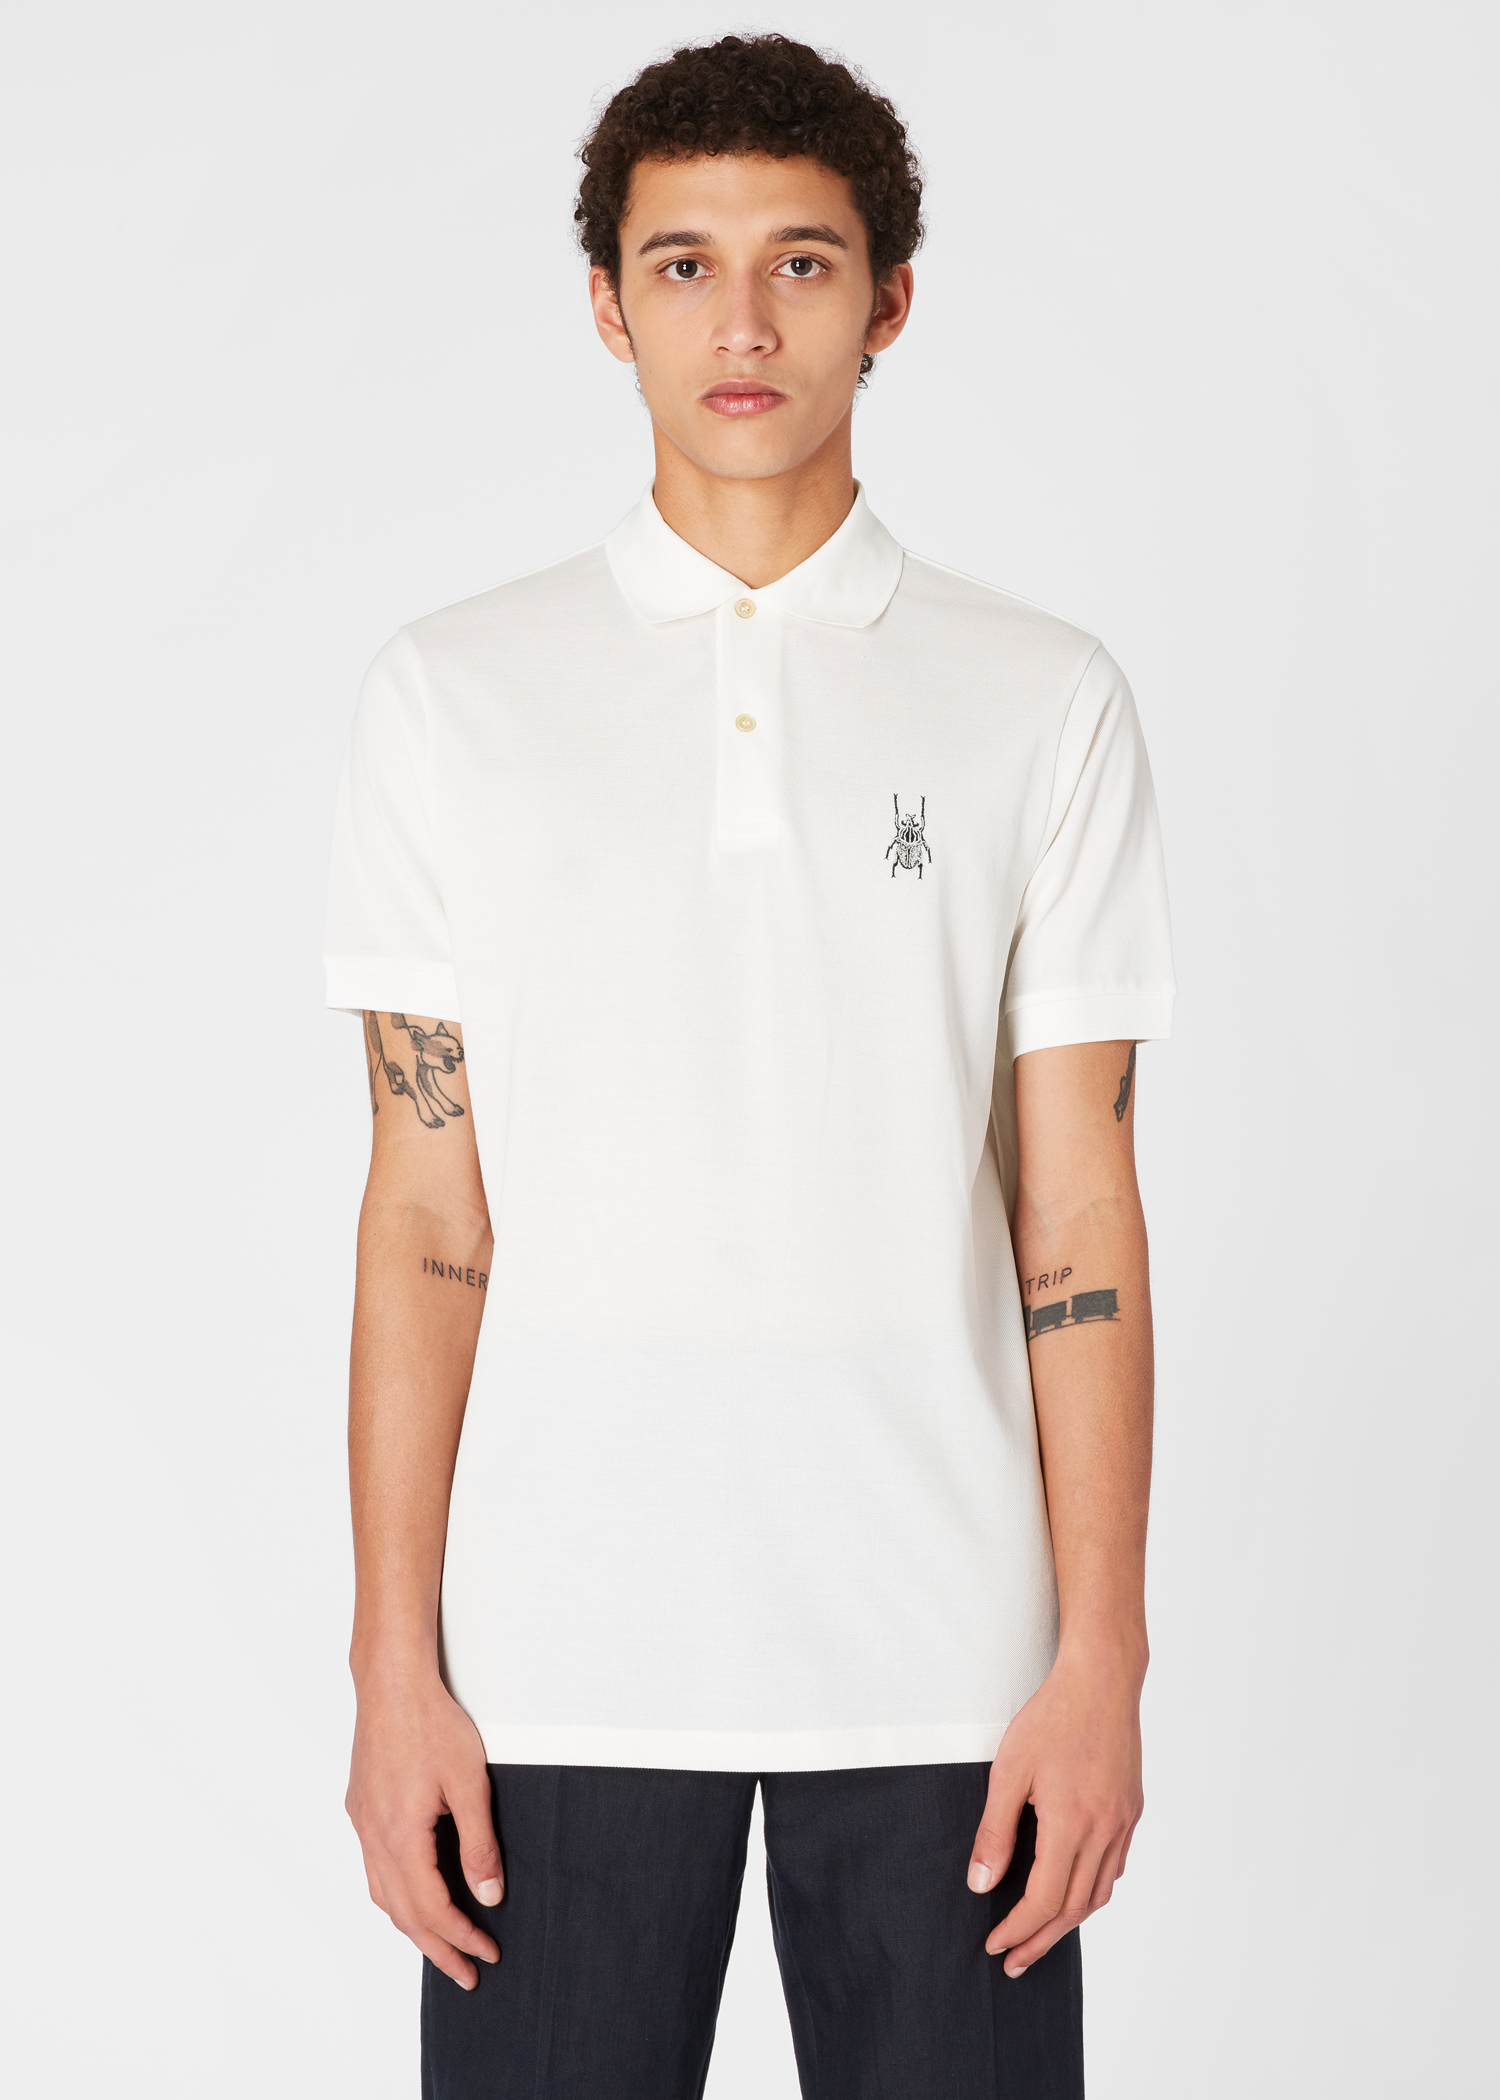 Men's White Polo Shirt 'Beetle' Embroidery